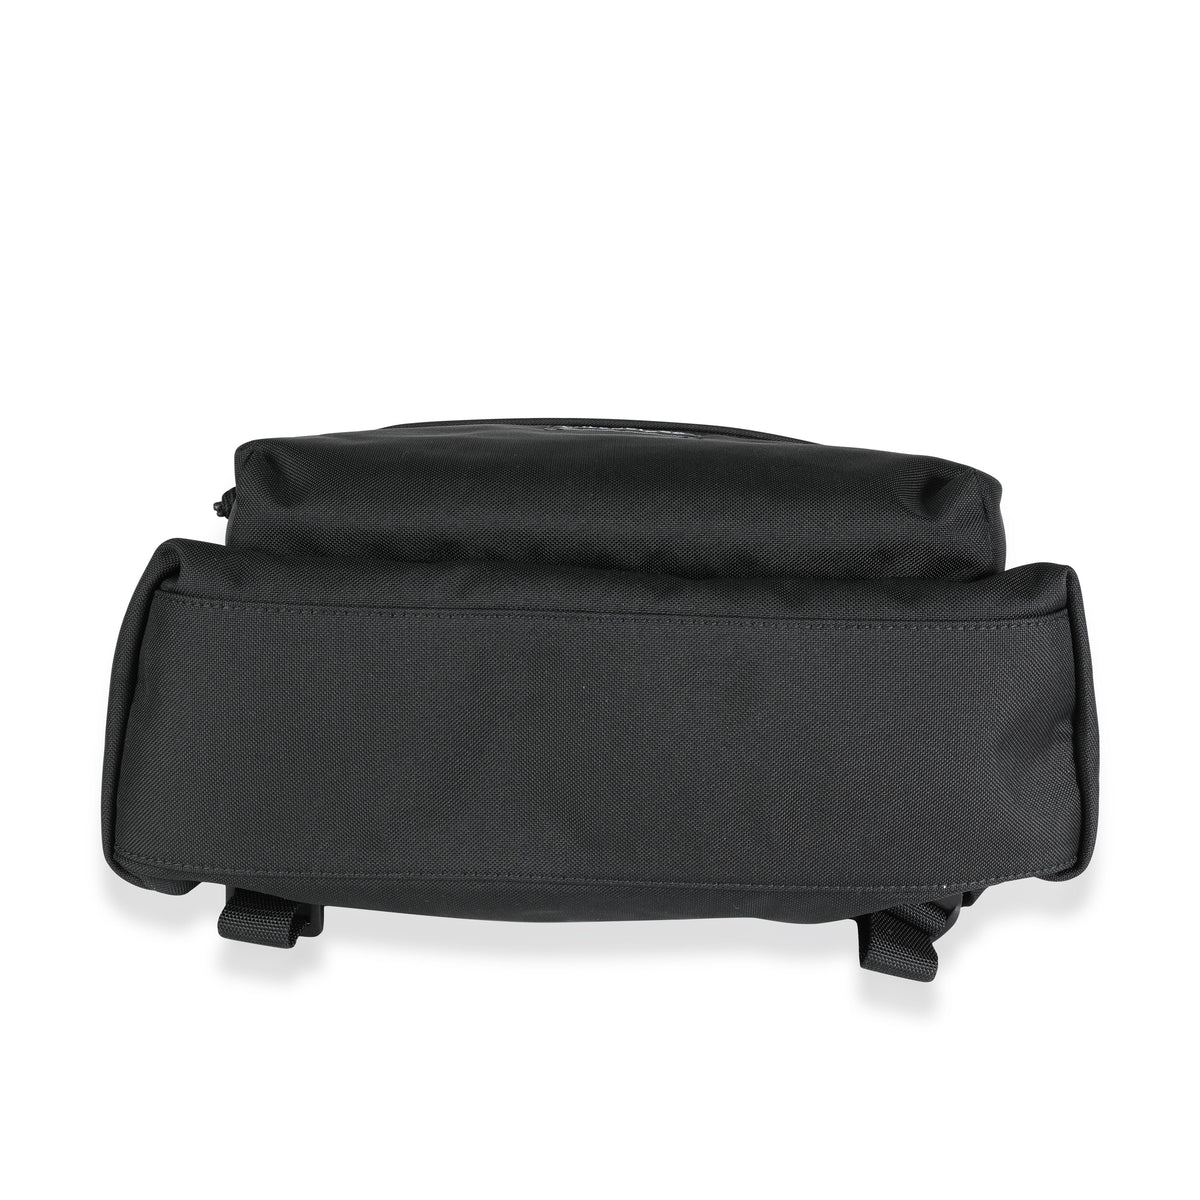 Balenciaga Black Nylon Explorer Backpack